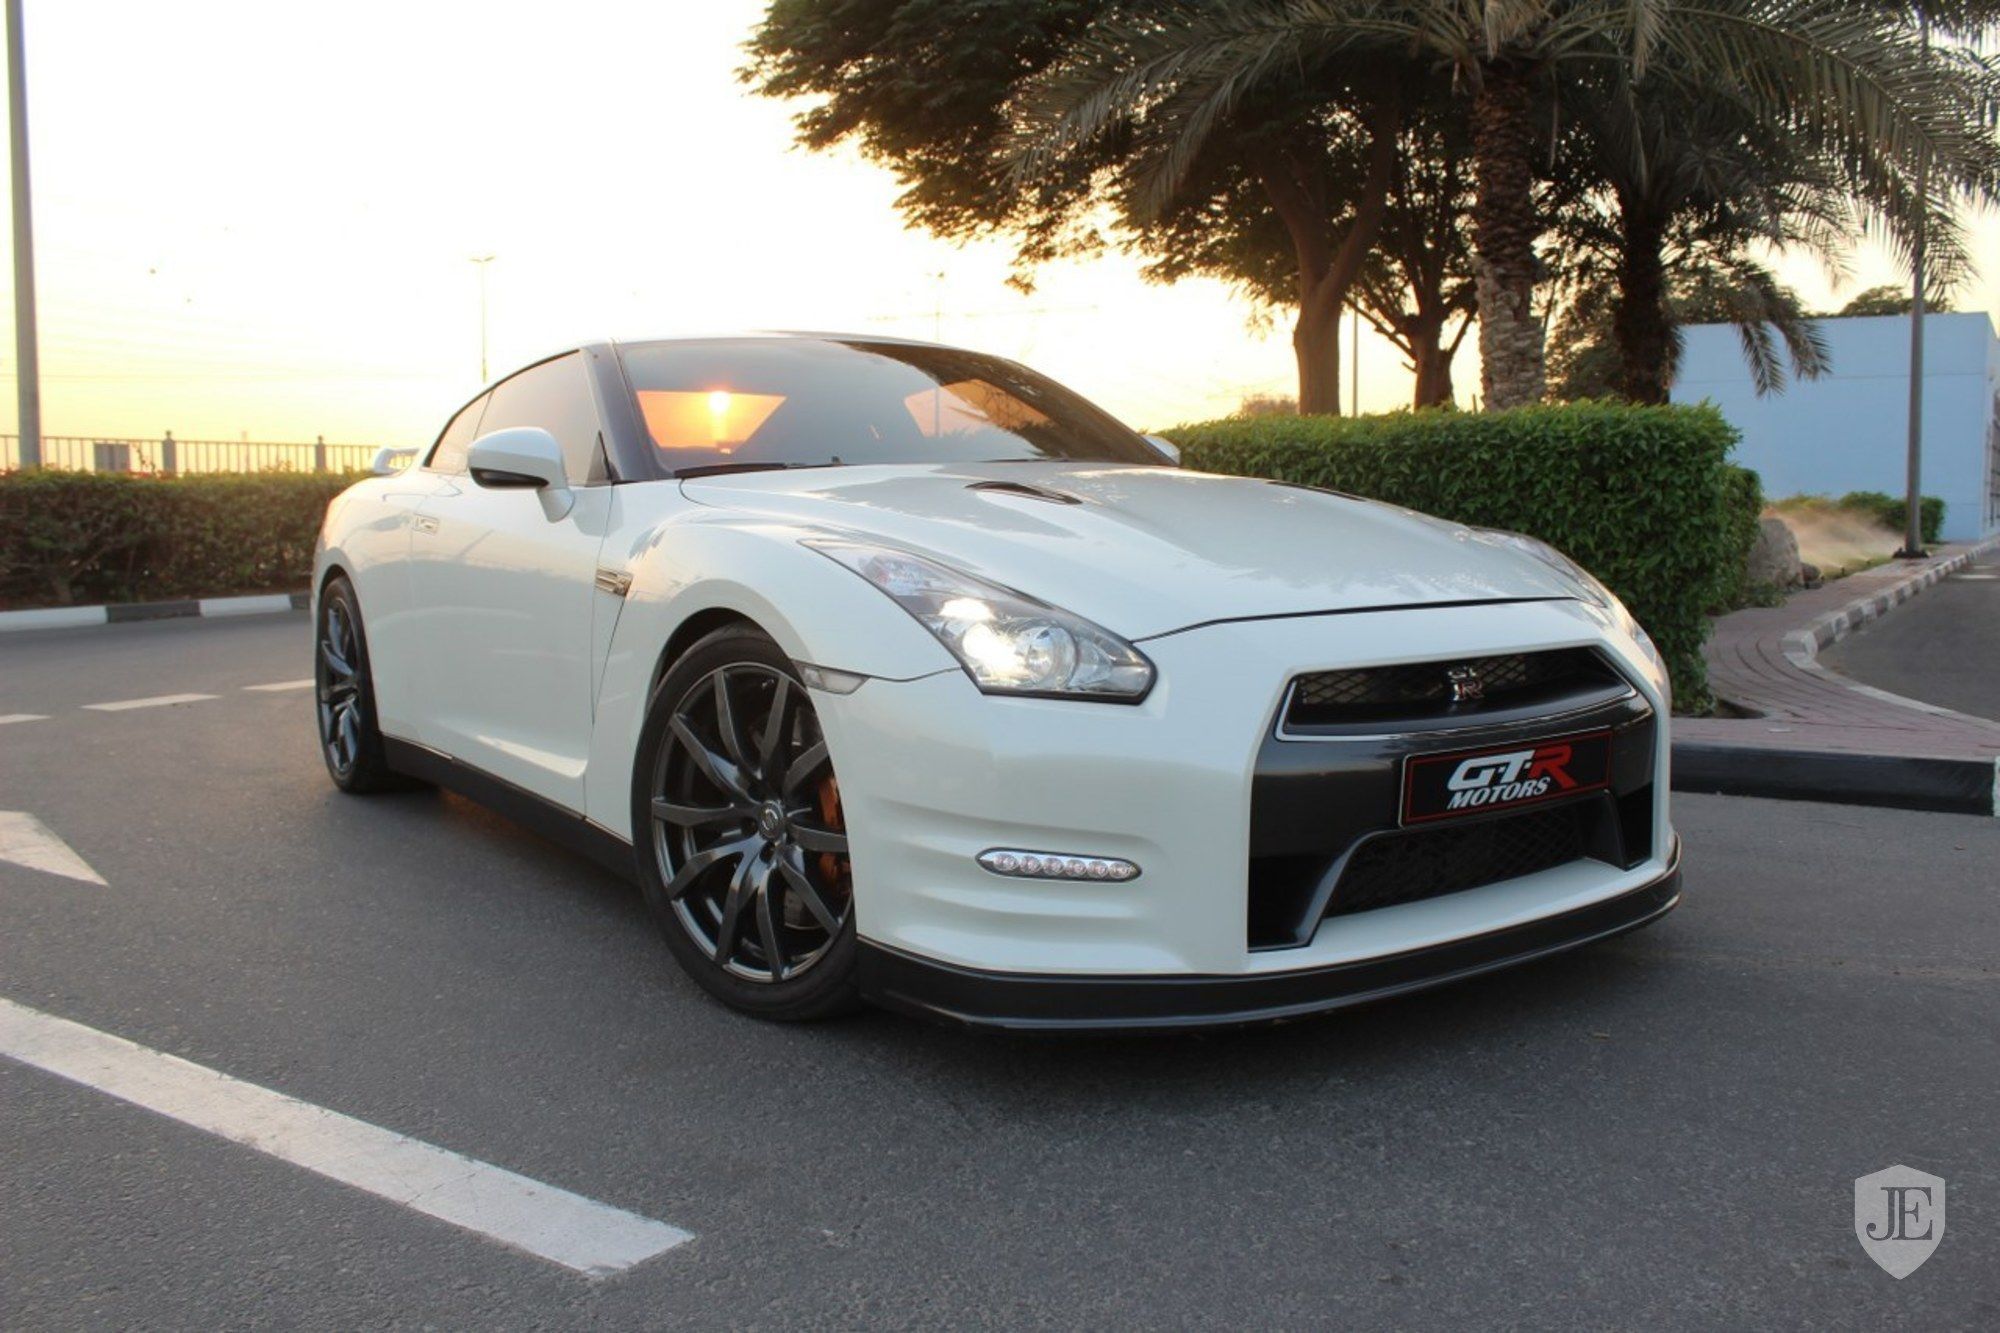 2012 Nissan GT-R in Dubai United Arab Emirates for sale on JamesEdition